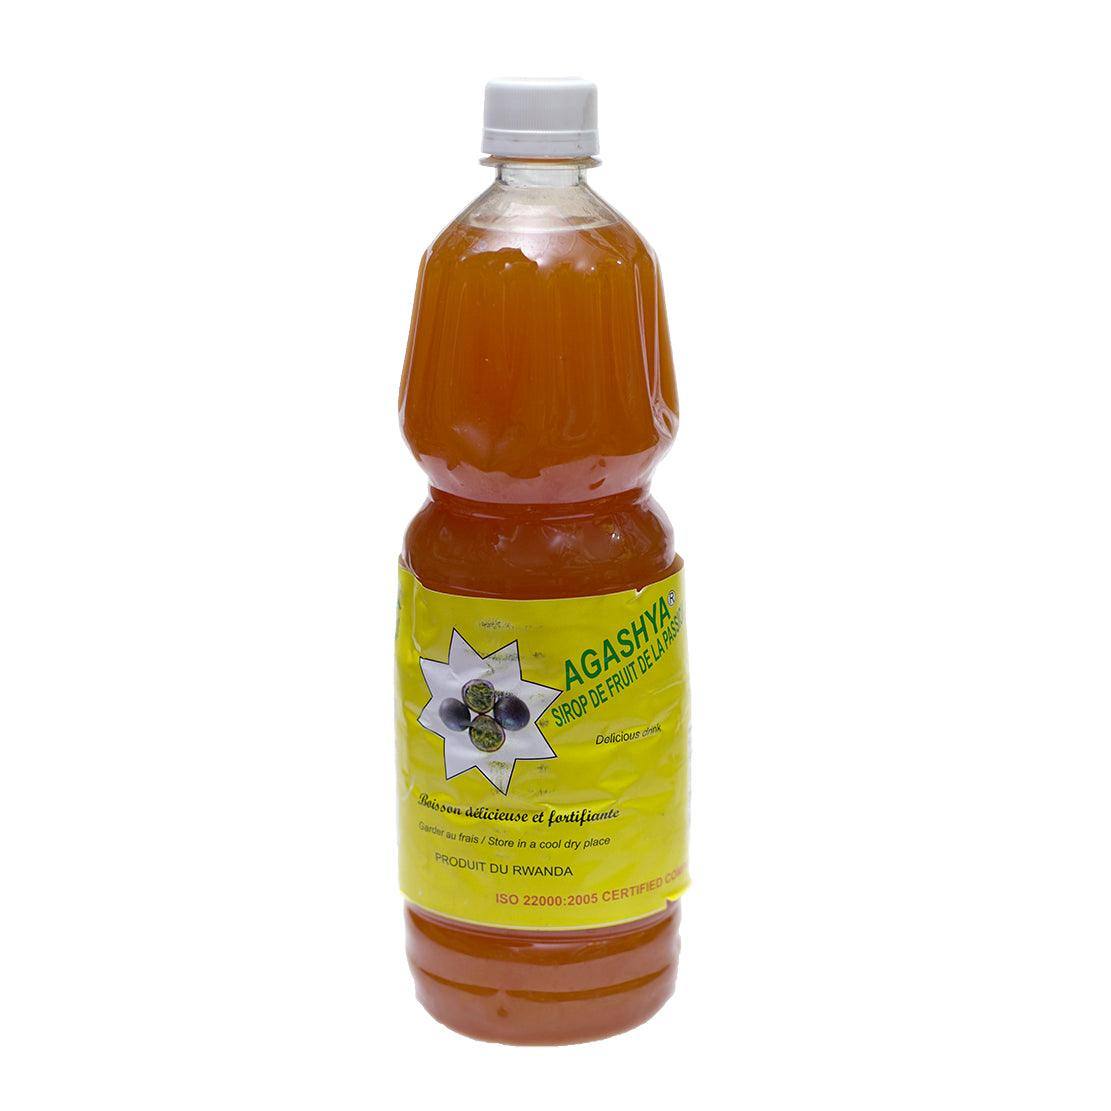 Agashya Passion Fruit Squash | 1 litre | Sina Rwanda | Passion Fruit Juice Concentrate - One Stop Chilli Shop